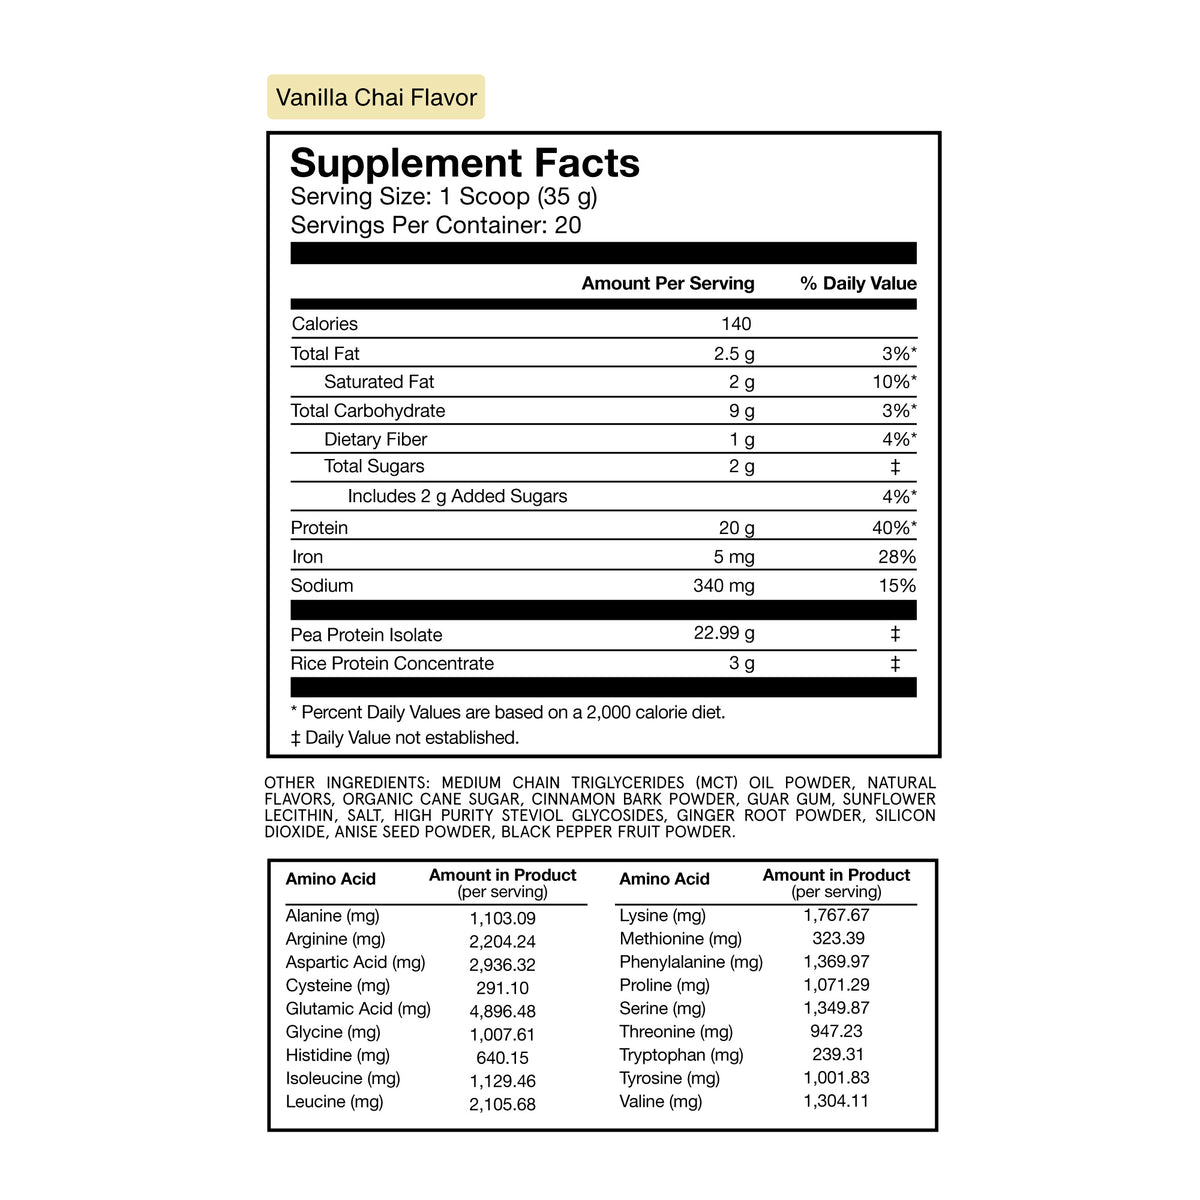 Vanilla Chai Flavored 100% Plant Protein Supplement Facts